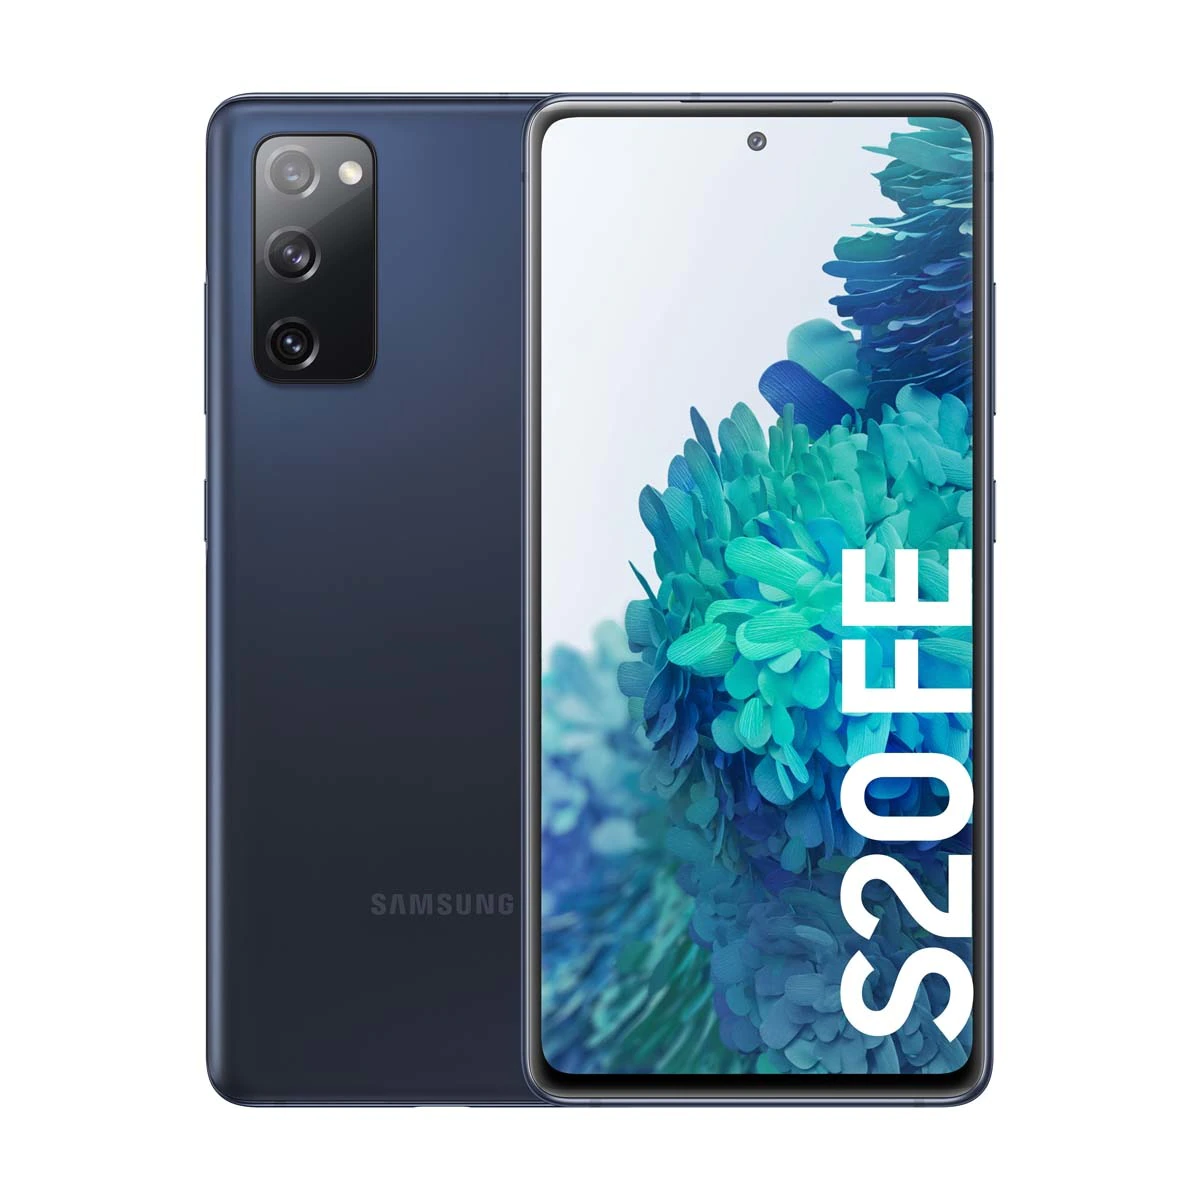 Samsung Galaxy S20 FE 8 GB + 256 GB azul marino móvil libre